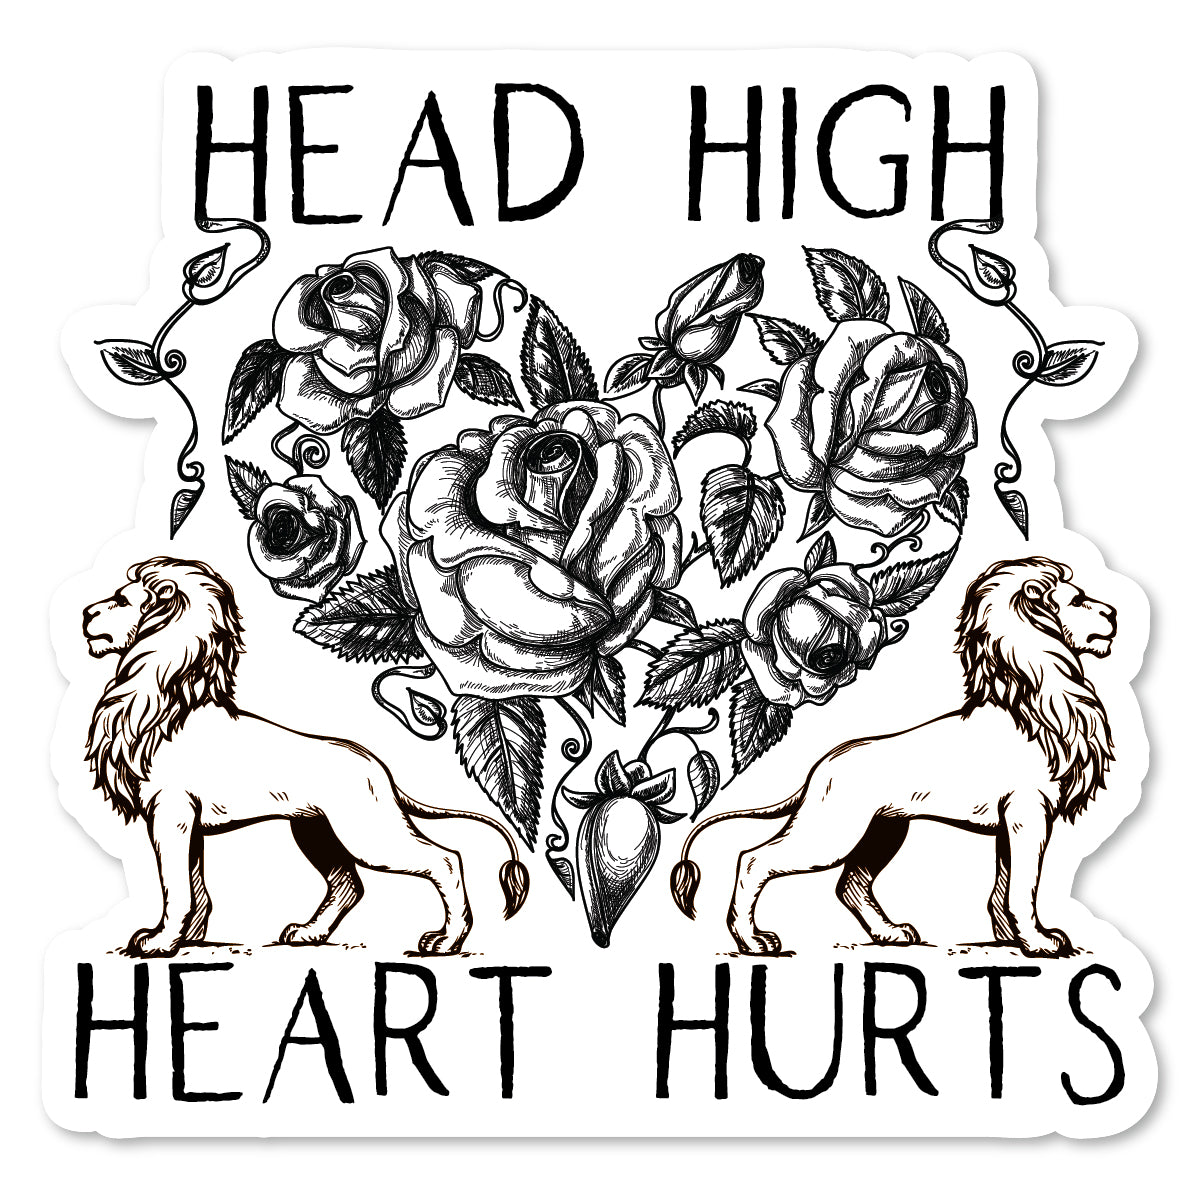 SPP-066 | Head High Heart Hurts